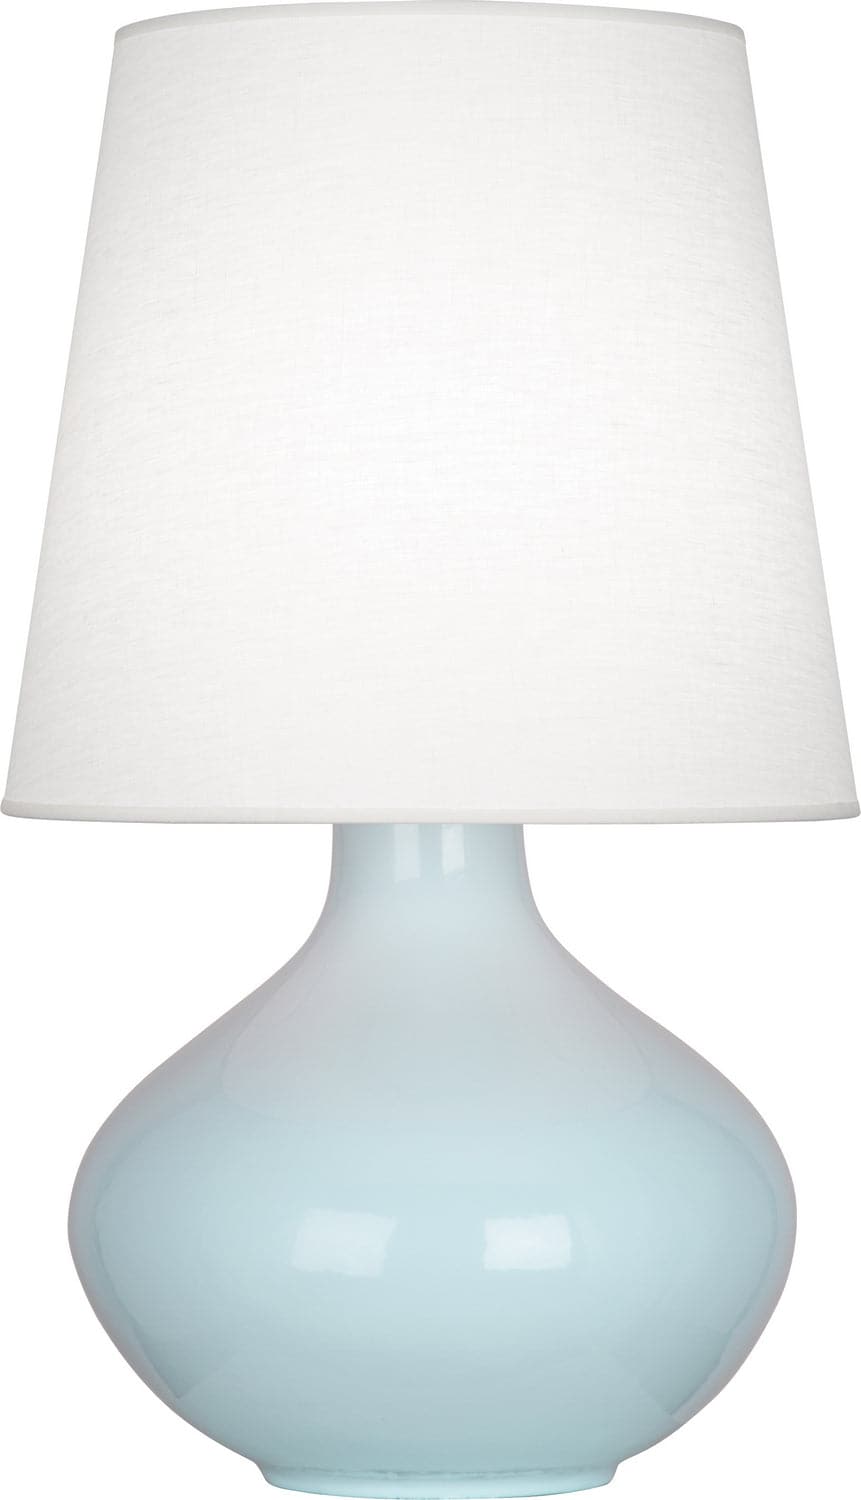 Robert Abbey - BB993 - One Light Table Lamp - June - Baby Blue Glazed